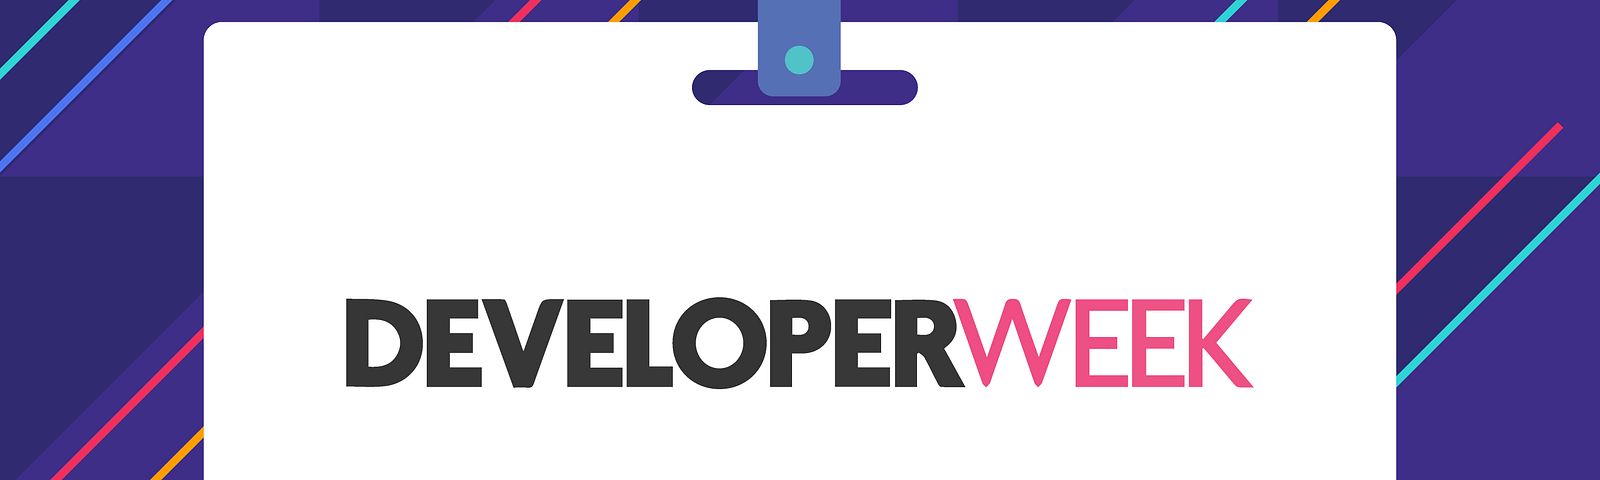 DeveloperWeek badge